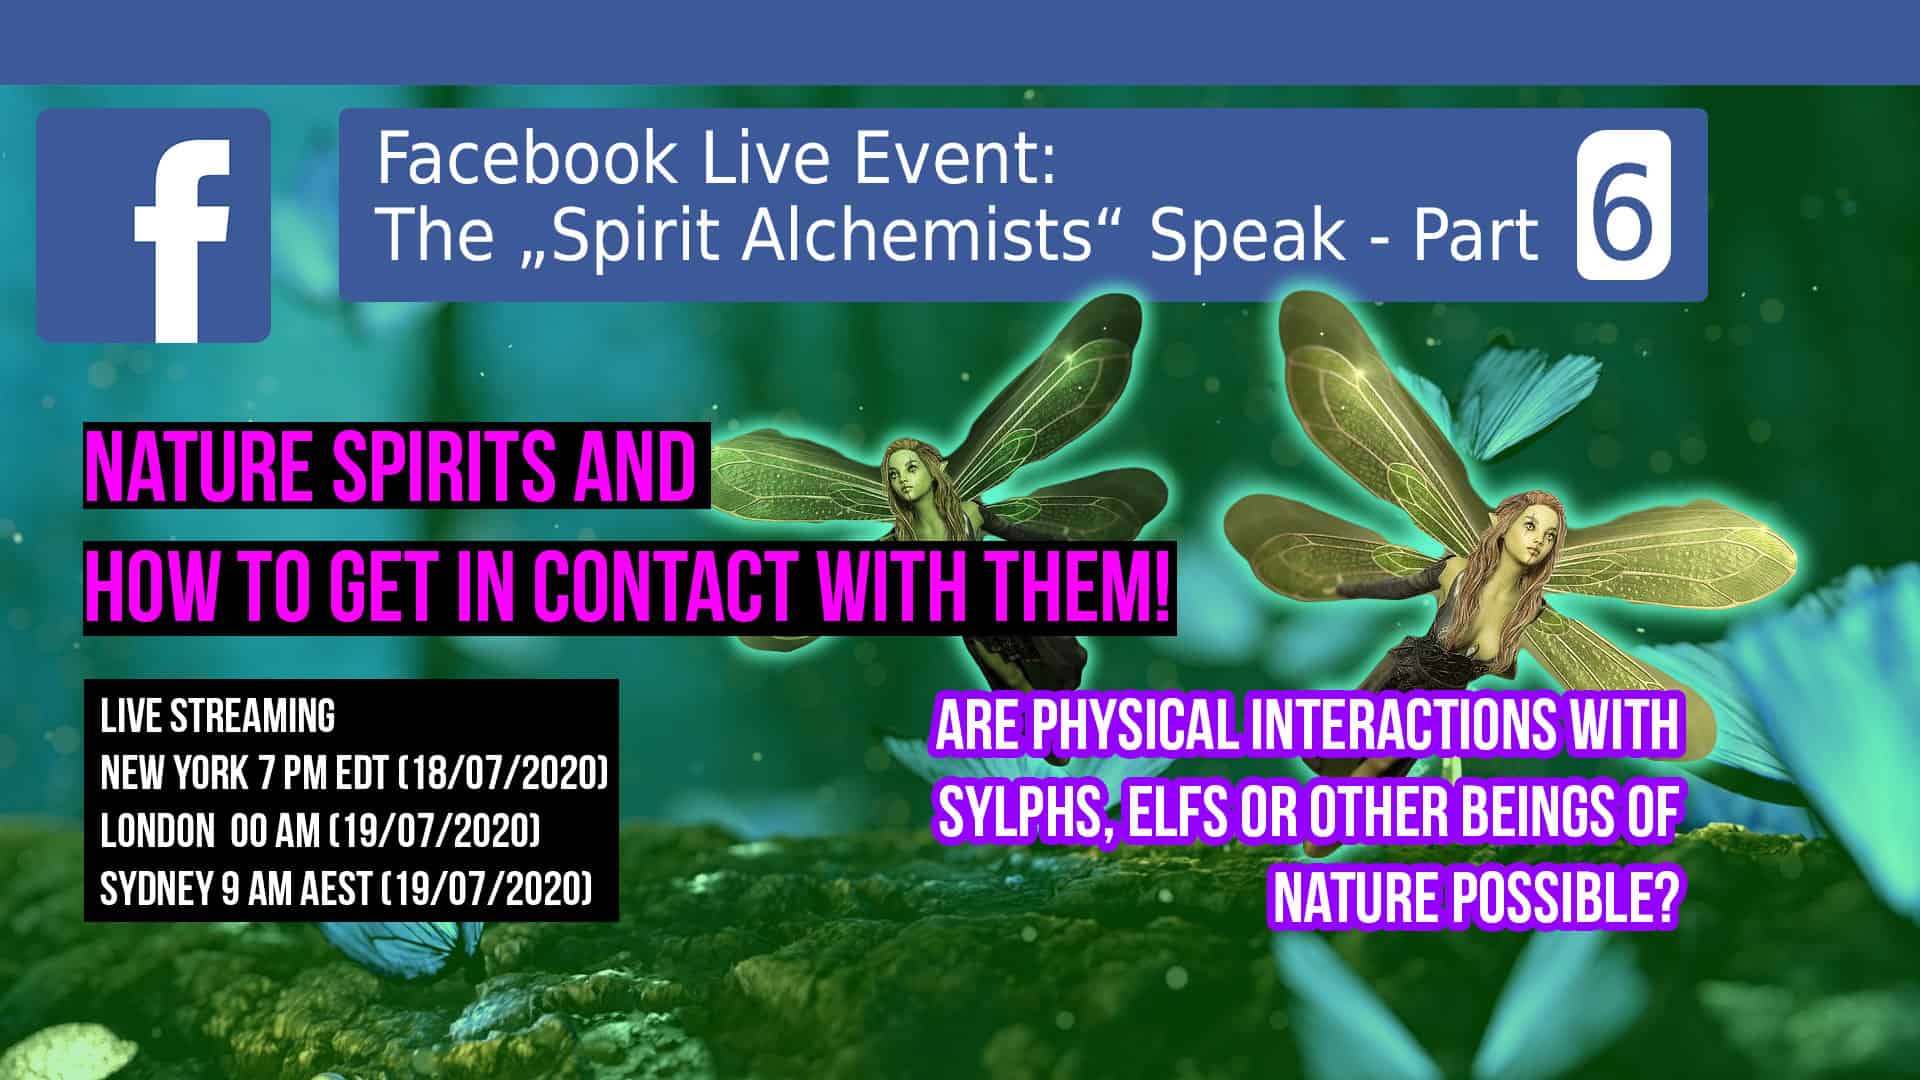 the-spirit-alchemists-speak---FB-Live-Event-6---3